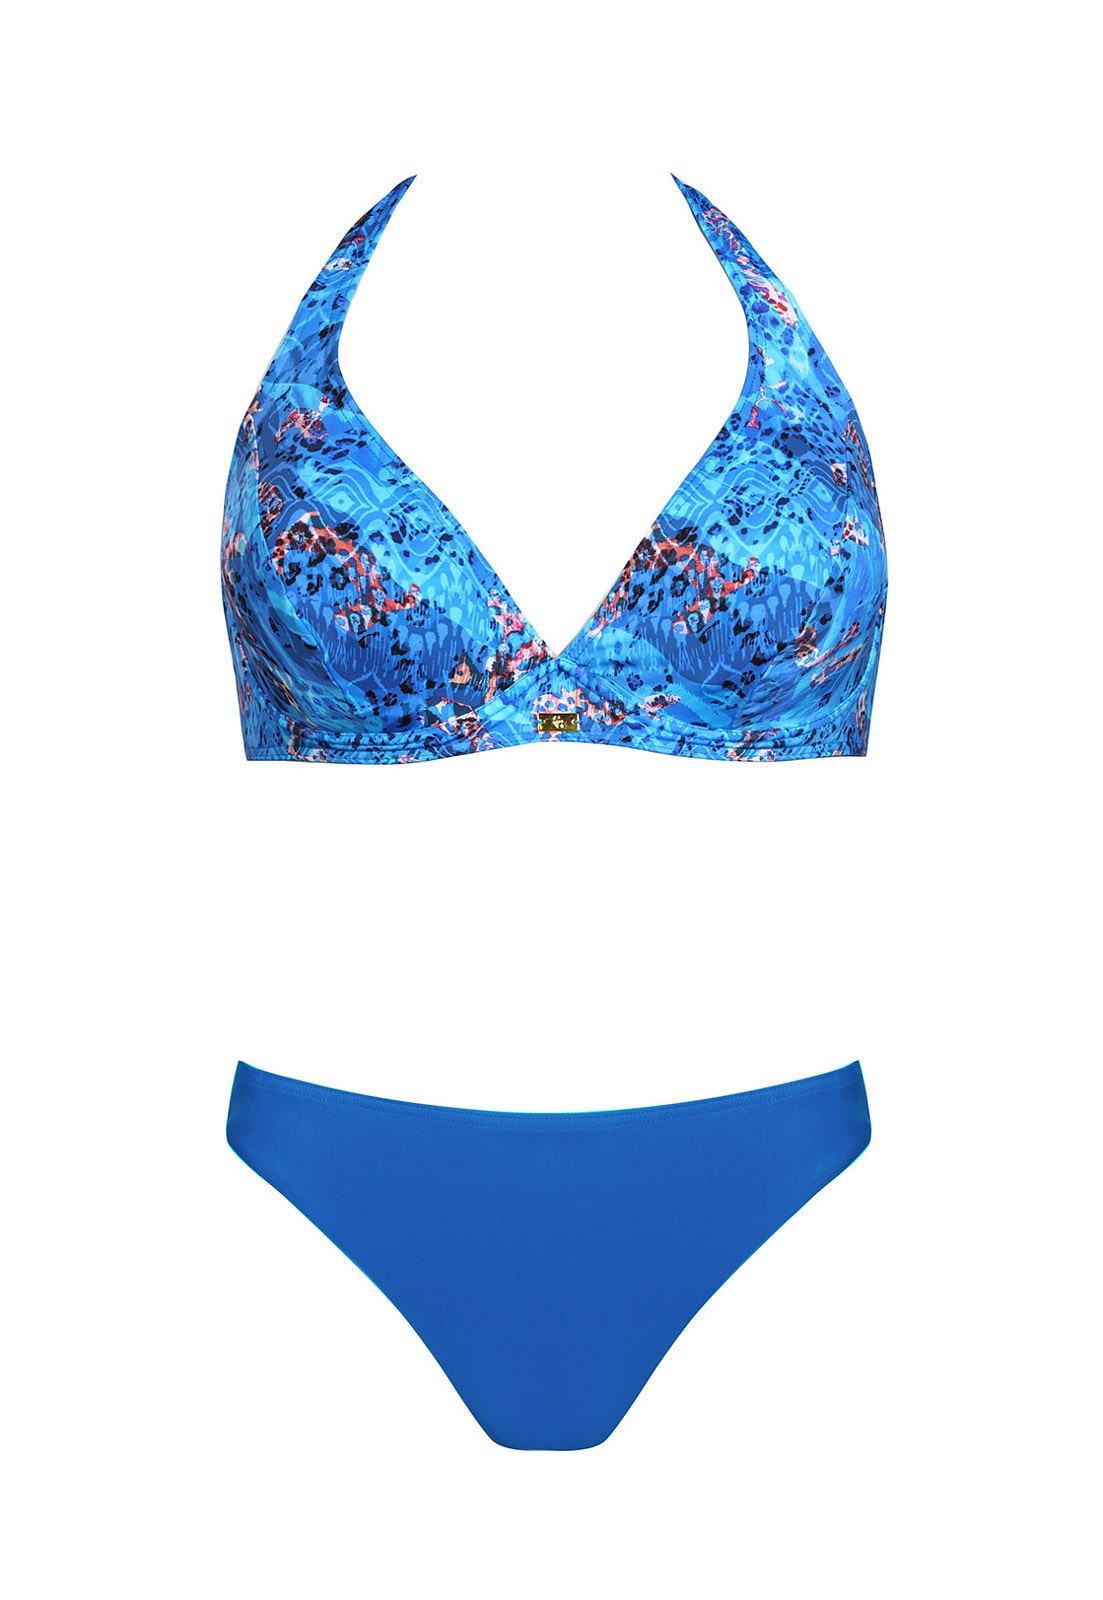 Dvoudílné dámské plavky S 115 BR9 Bora Bora 9 modré - Self 40E